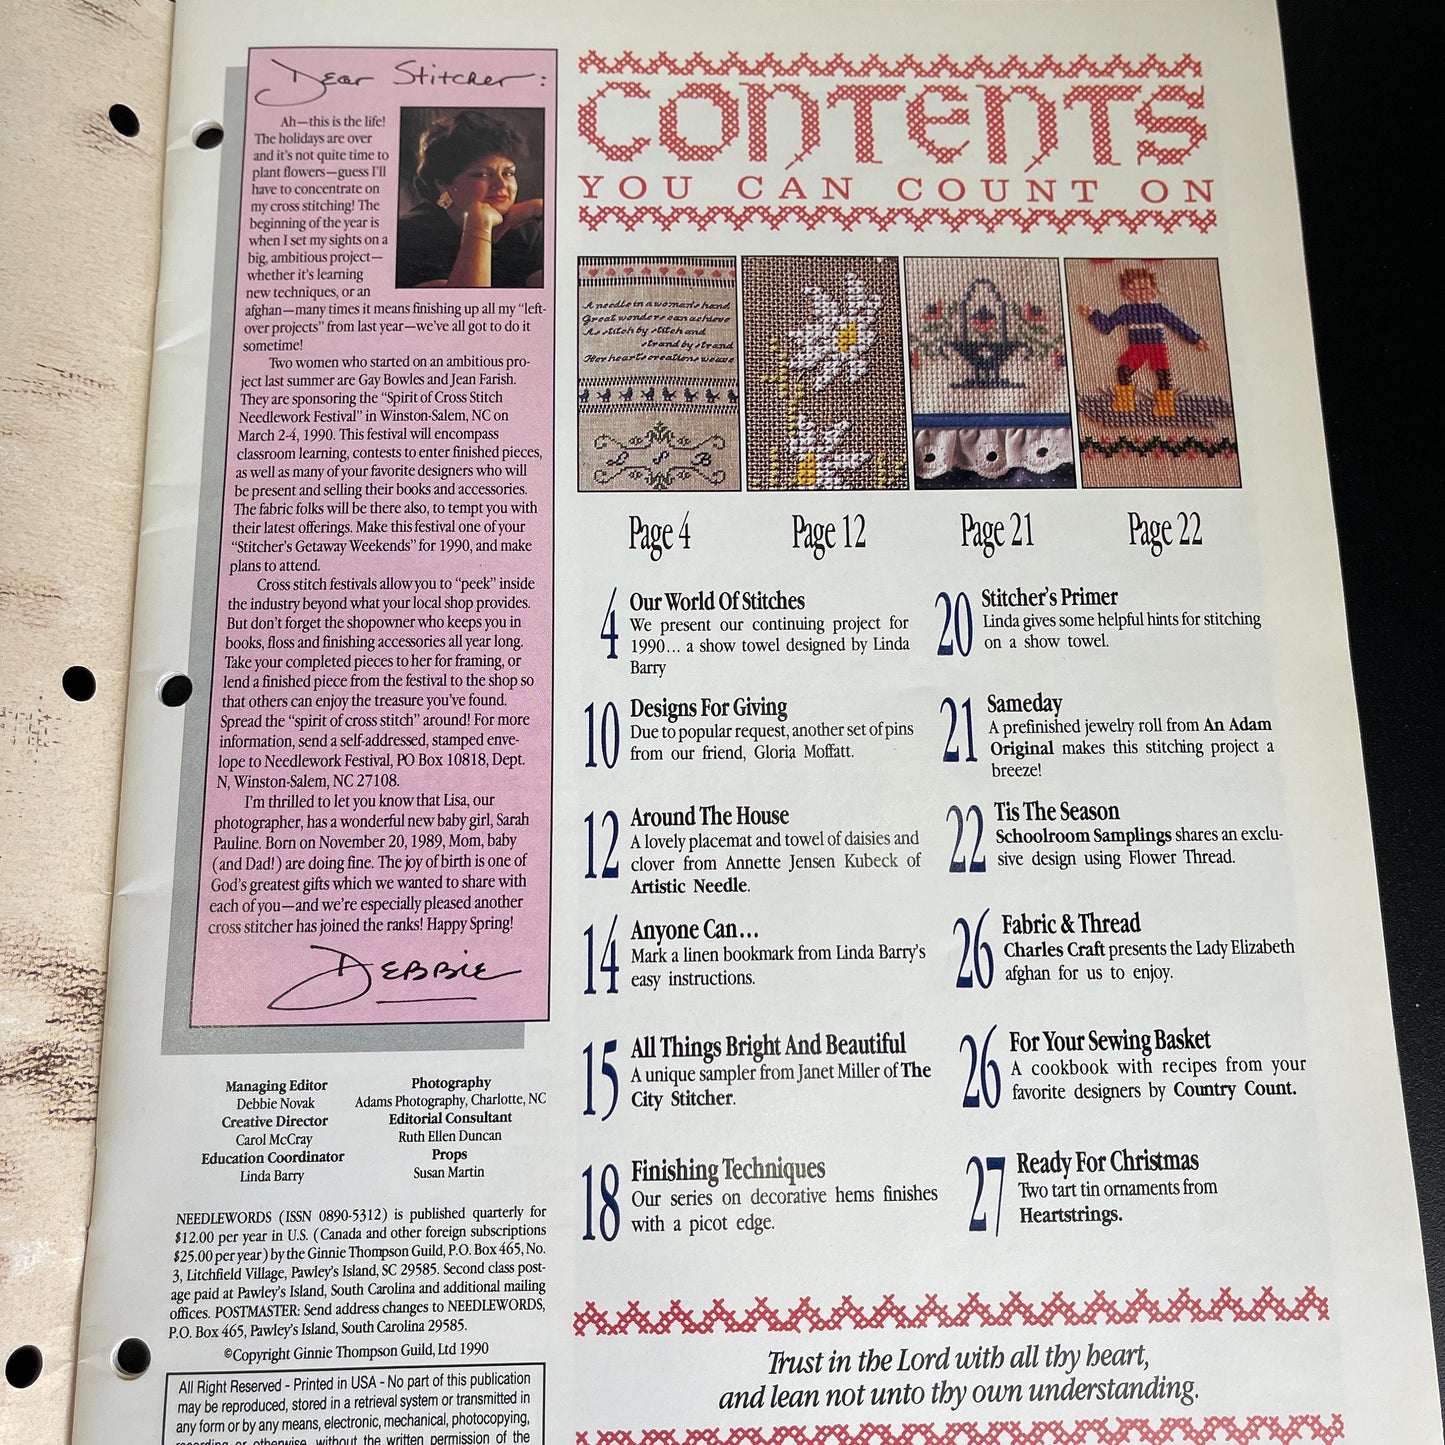 Needlewords Set of 3 Vintage 1988 Counted Cross Stitch Design Magazines Vol 6 No 2, Vol 6 No 4 & Vol 8 No 1